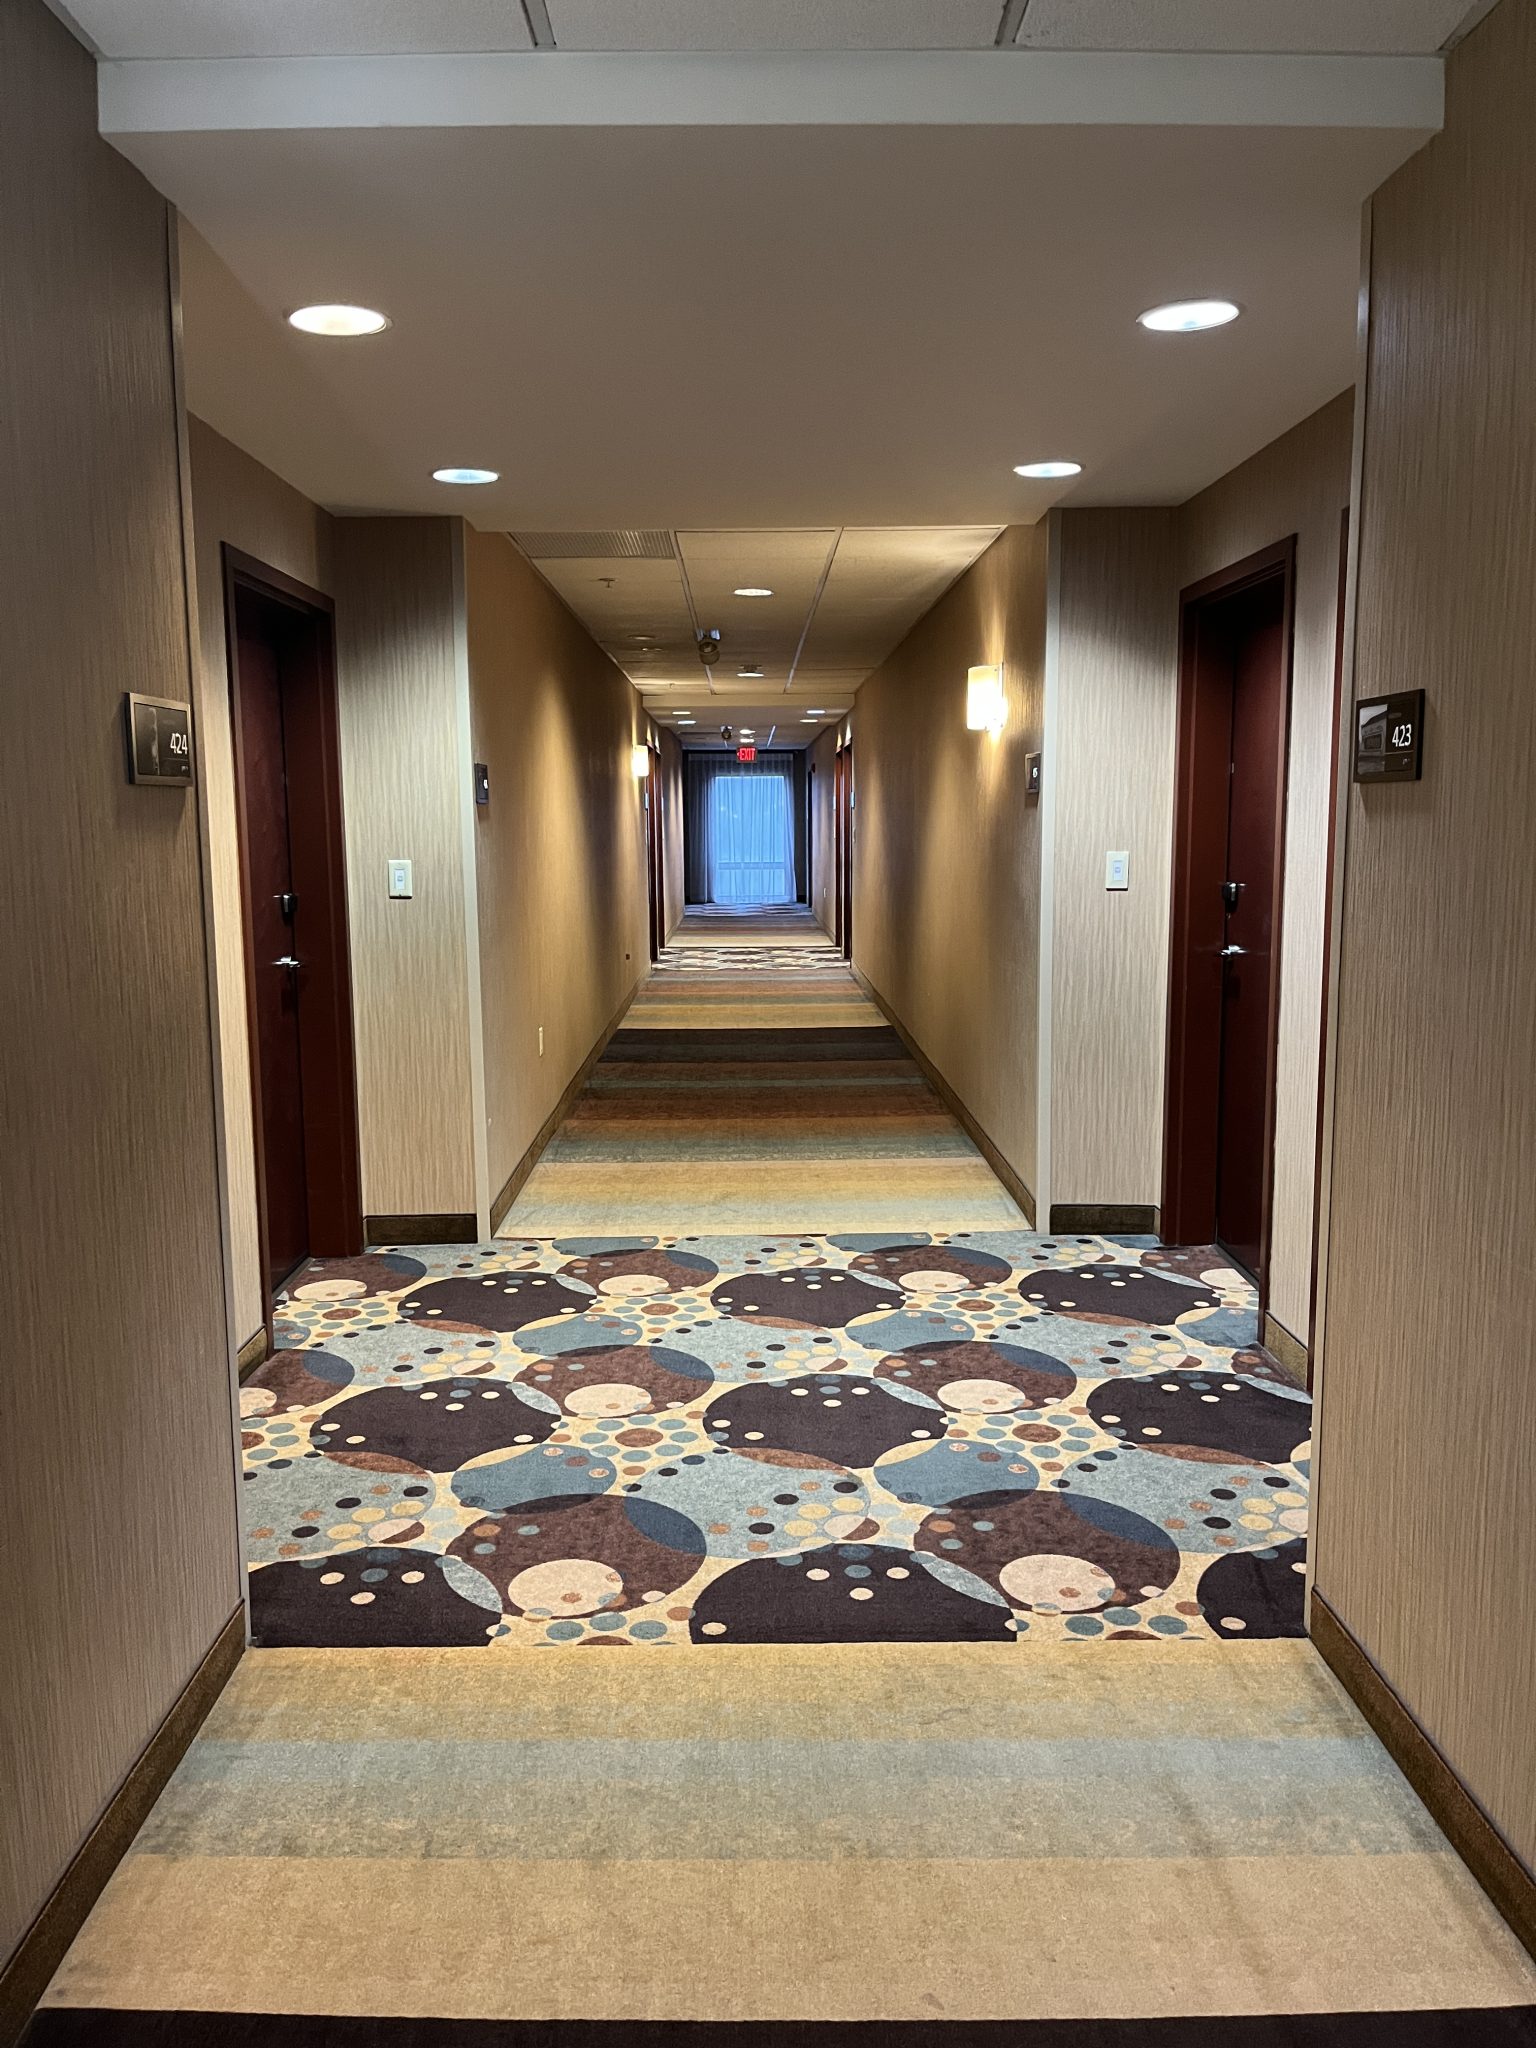 Hotel hallway, looking down the hall, maybe 8 doors long.